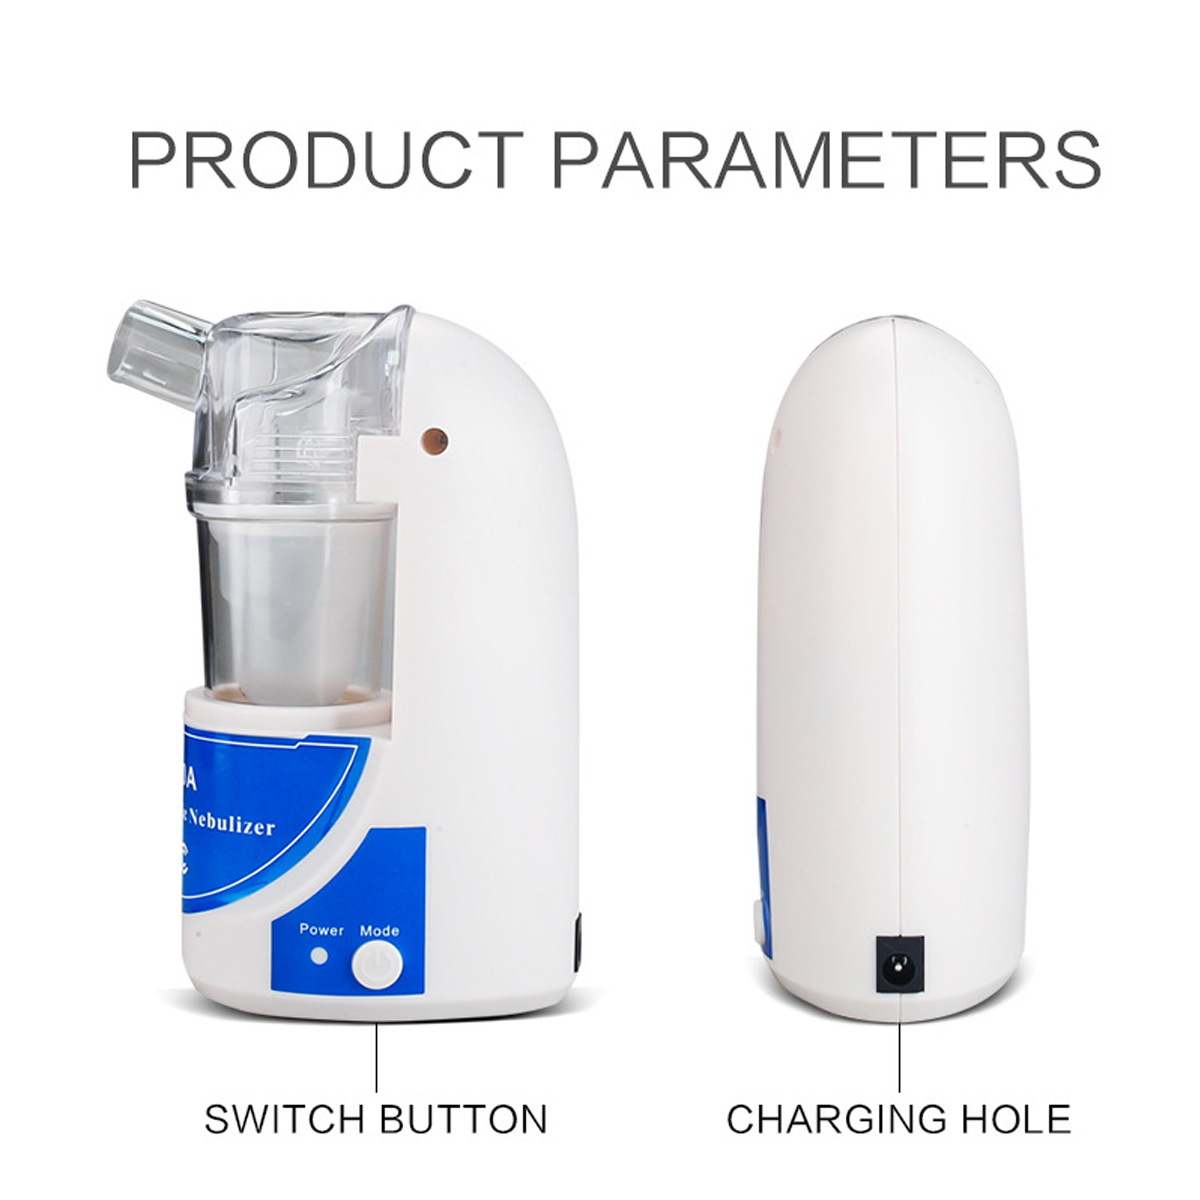 Portable Atomizer Handheld Nebulizer Humidifier Respirator Steam Inhaler For Adult & Child